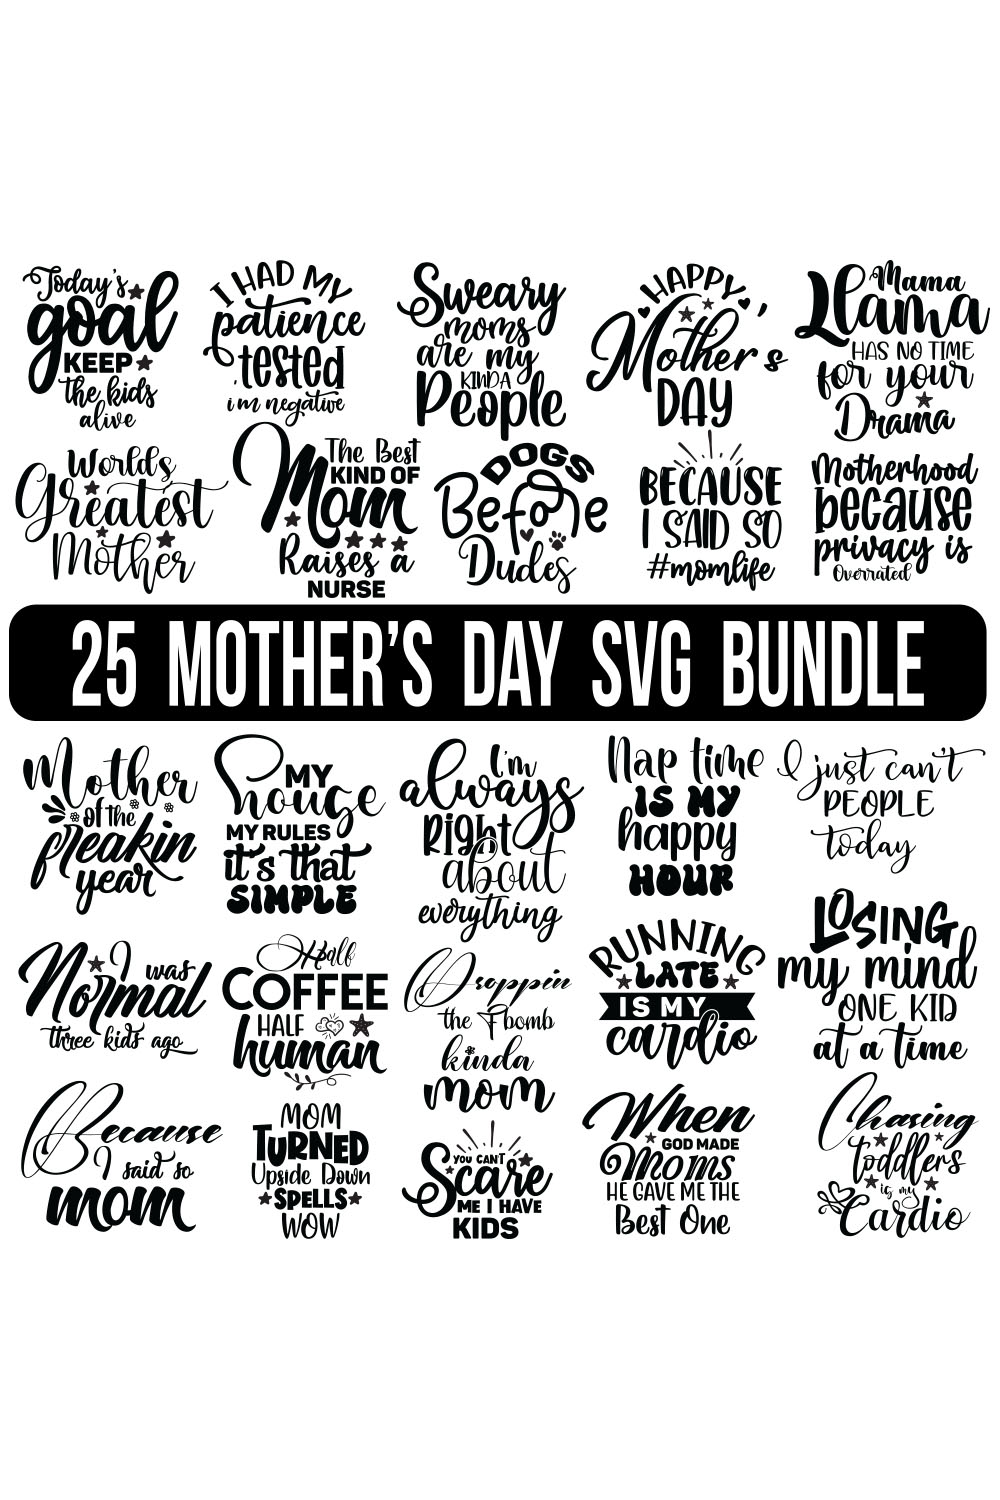 Women's Day SVG Bundle, Women's Day SVG designs, Girl power designs, SVG files, Digital downloads, Mom Bundle SVG, Mother's Day Svg, pinterest preview image.